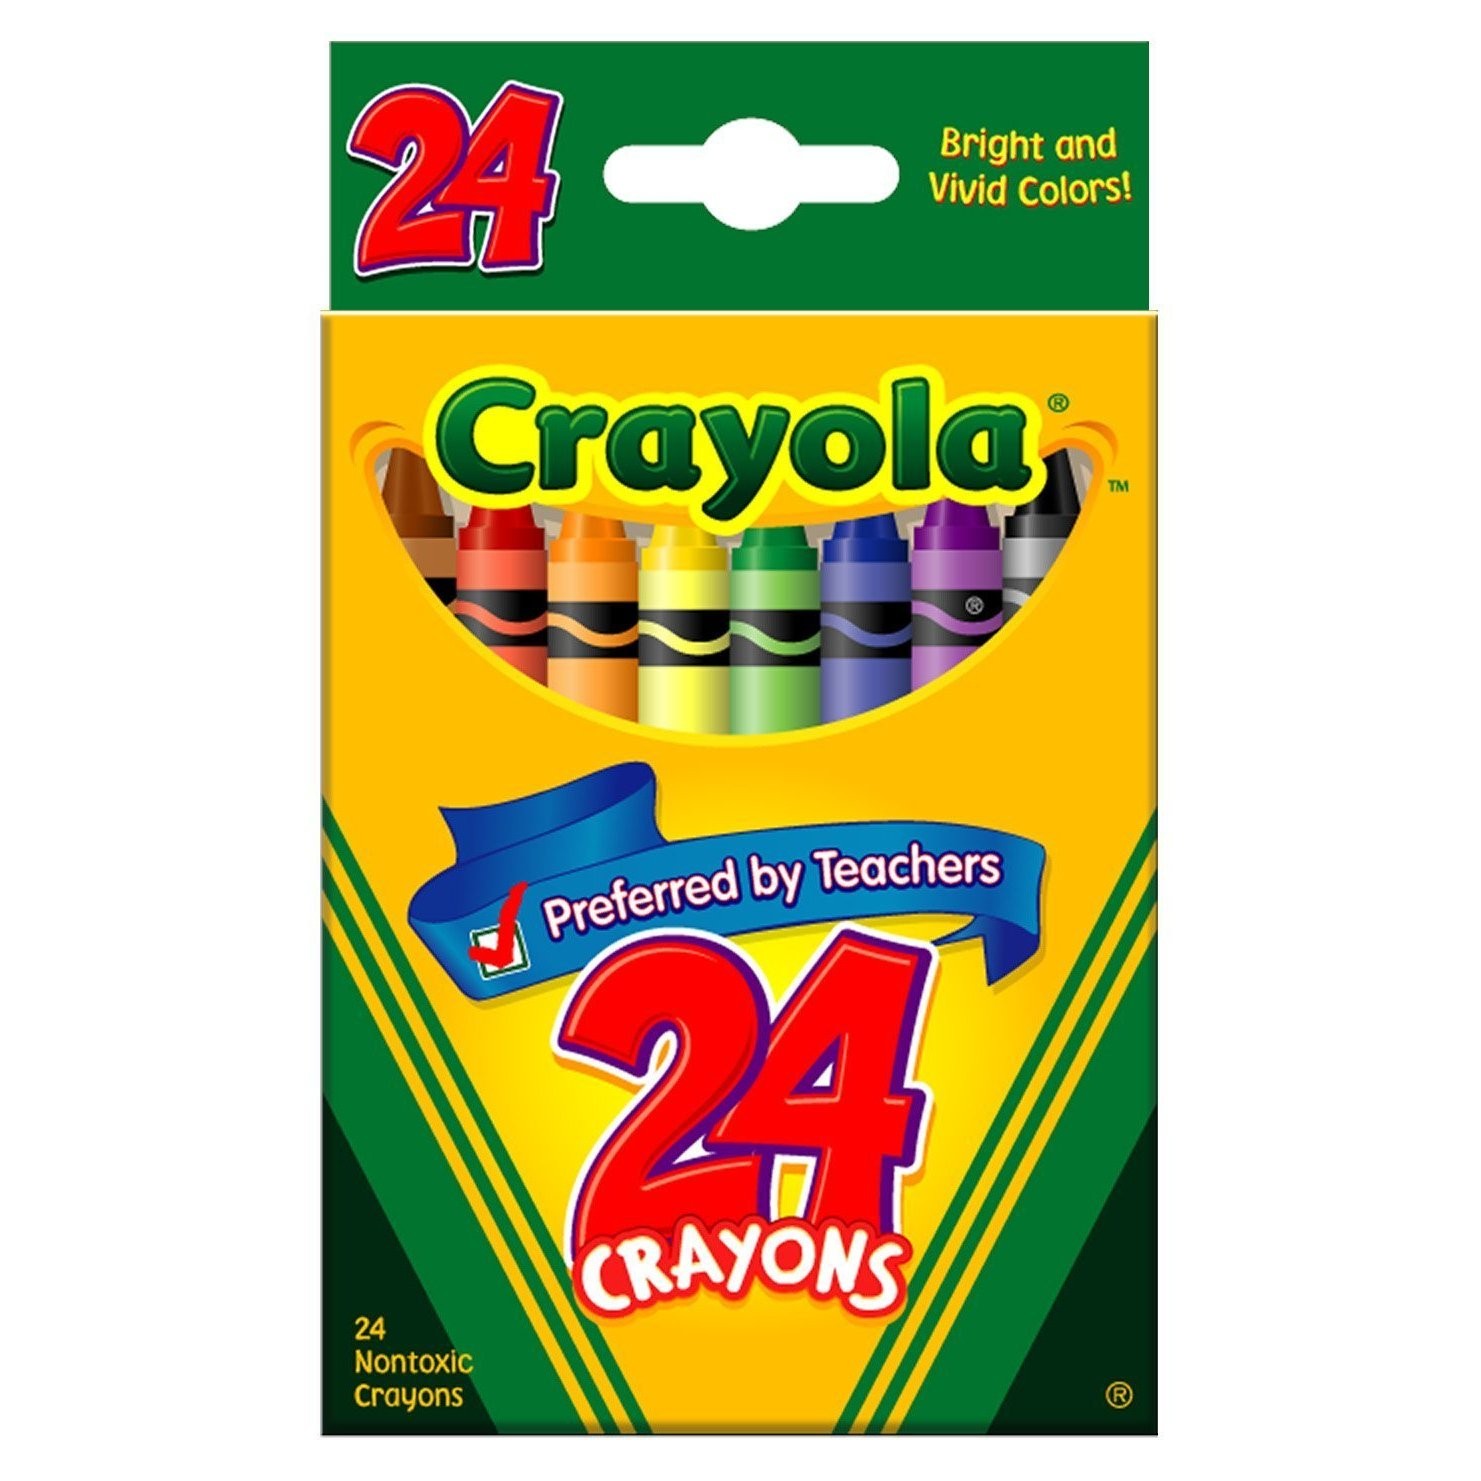 Crayola Crayon Box Clipart.